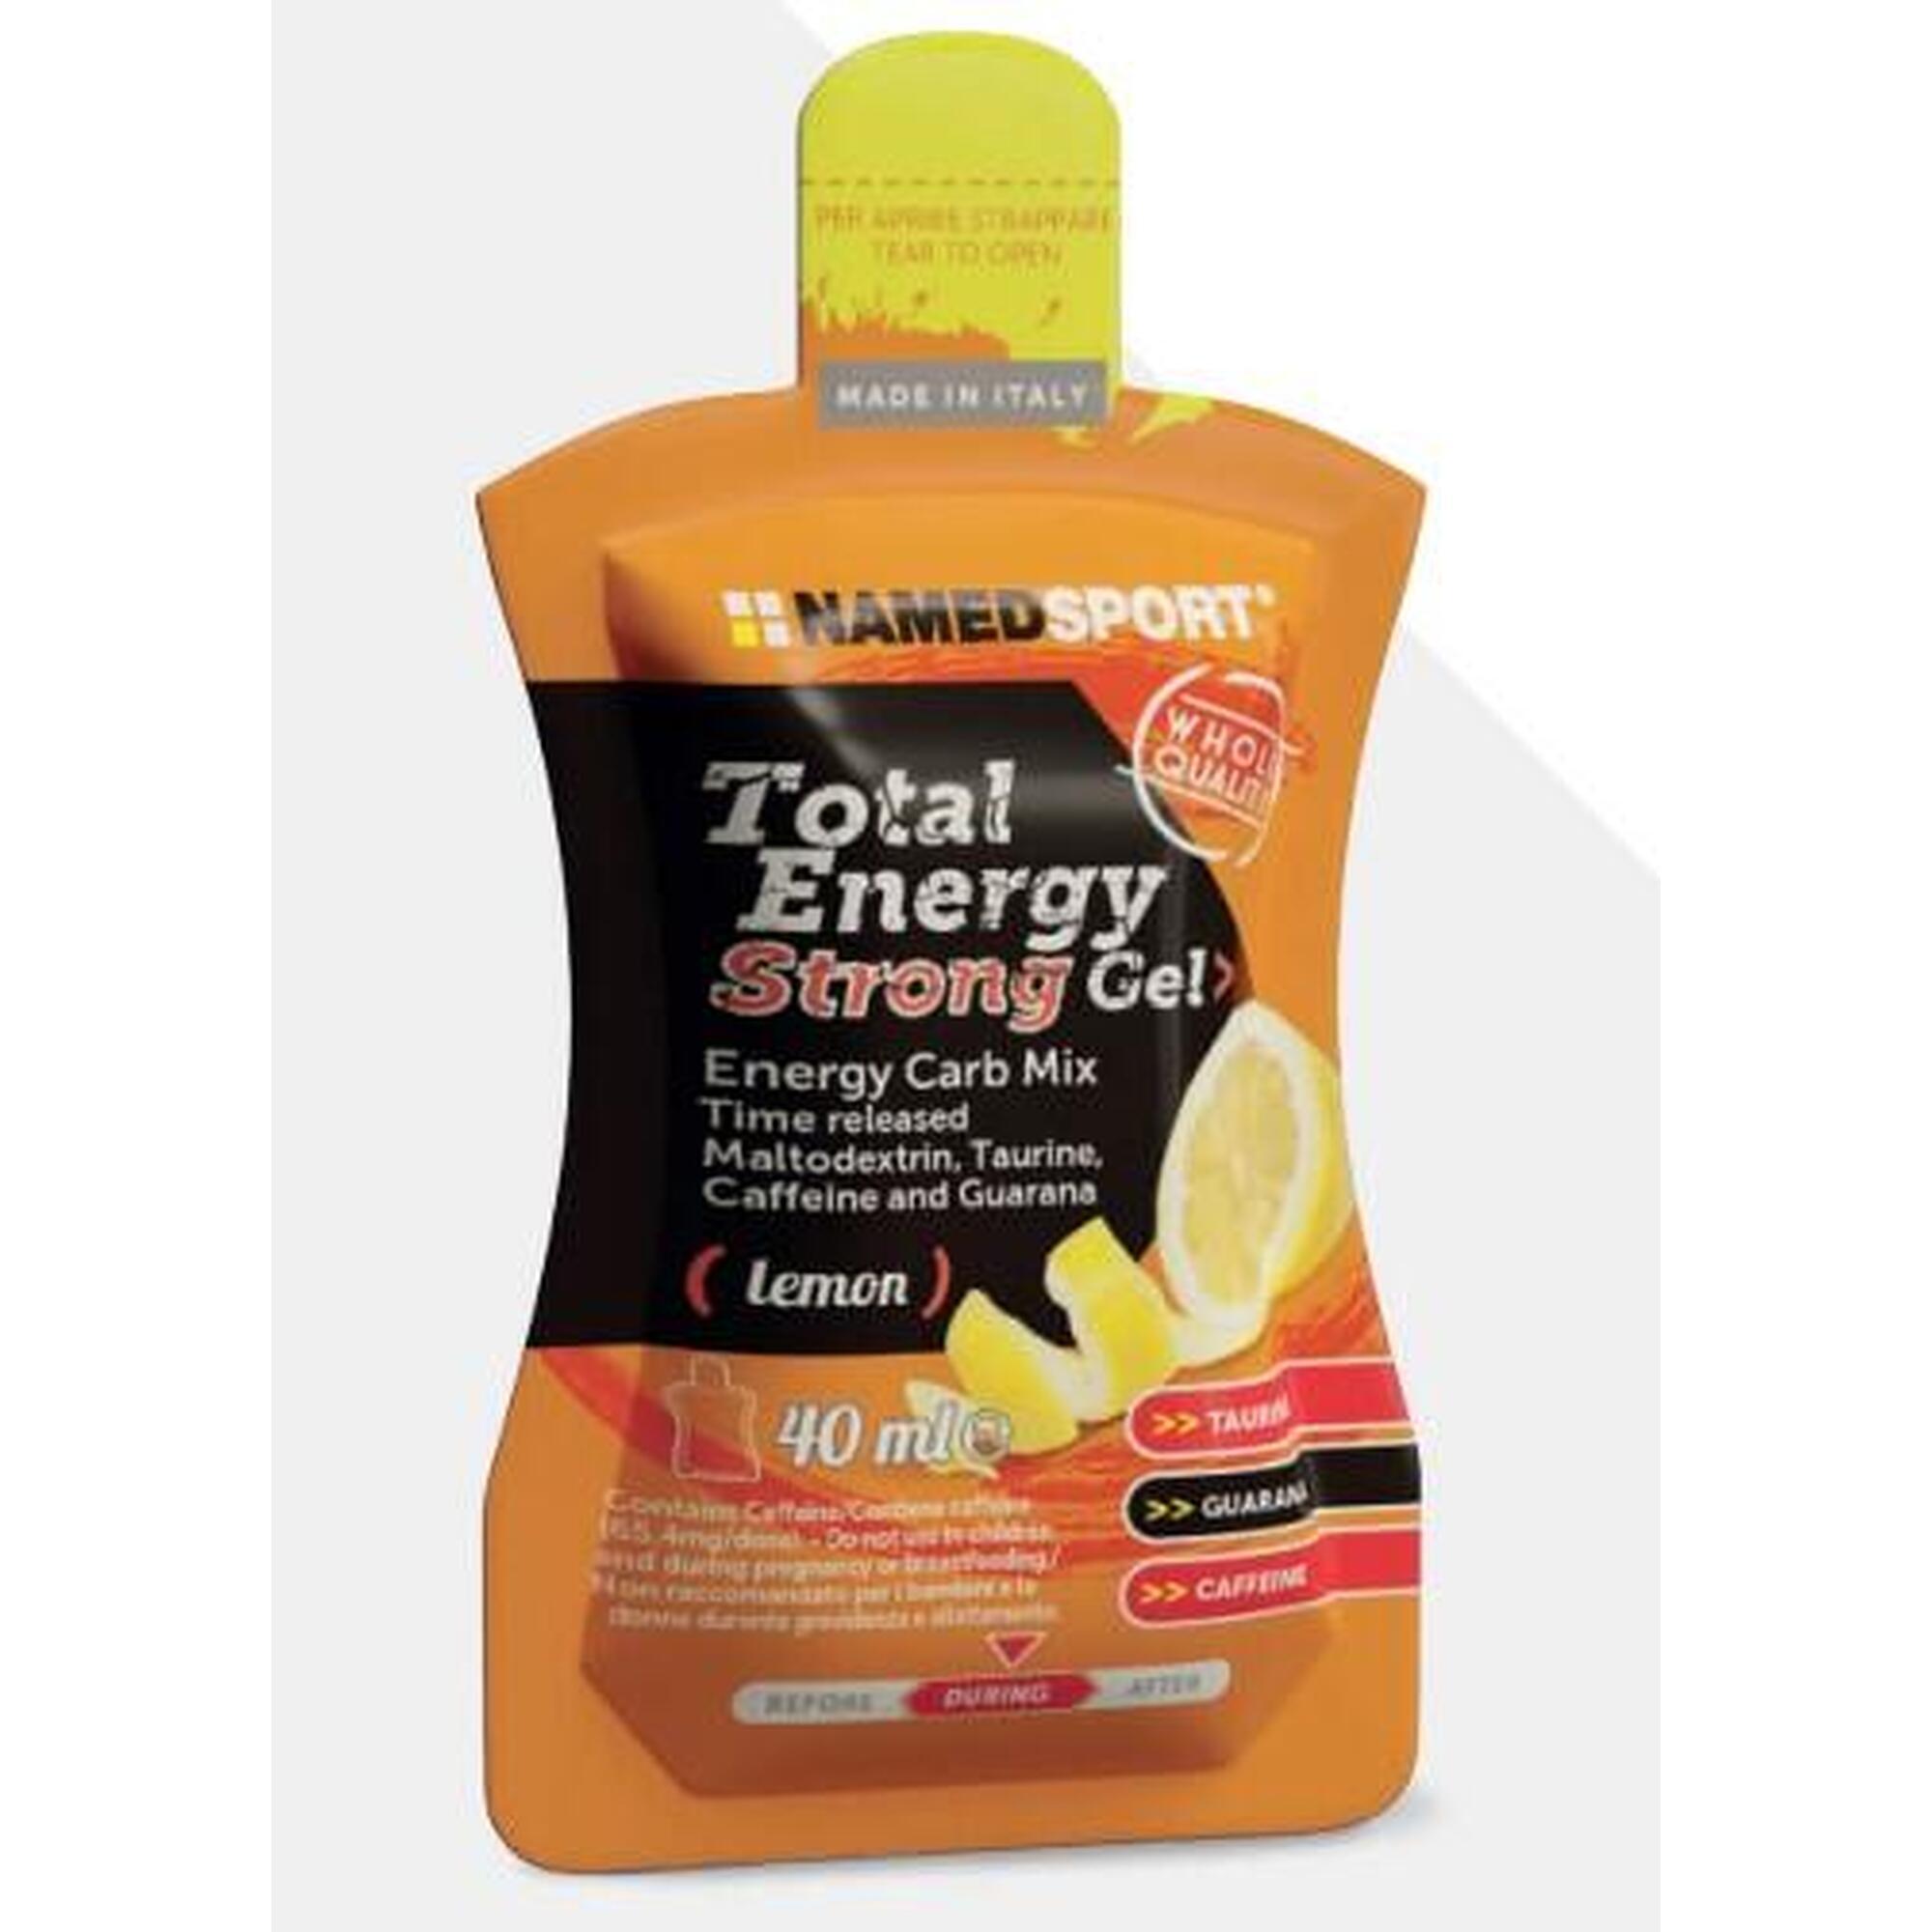 Total Energy 強力能量膠 40g - 檸檬味